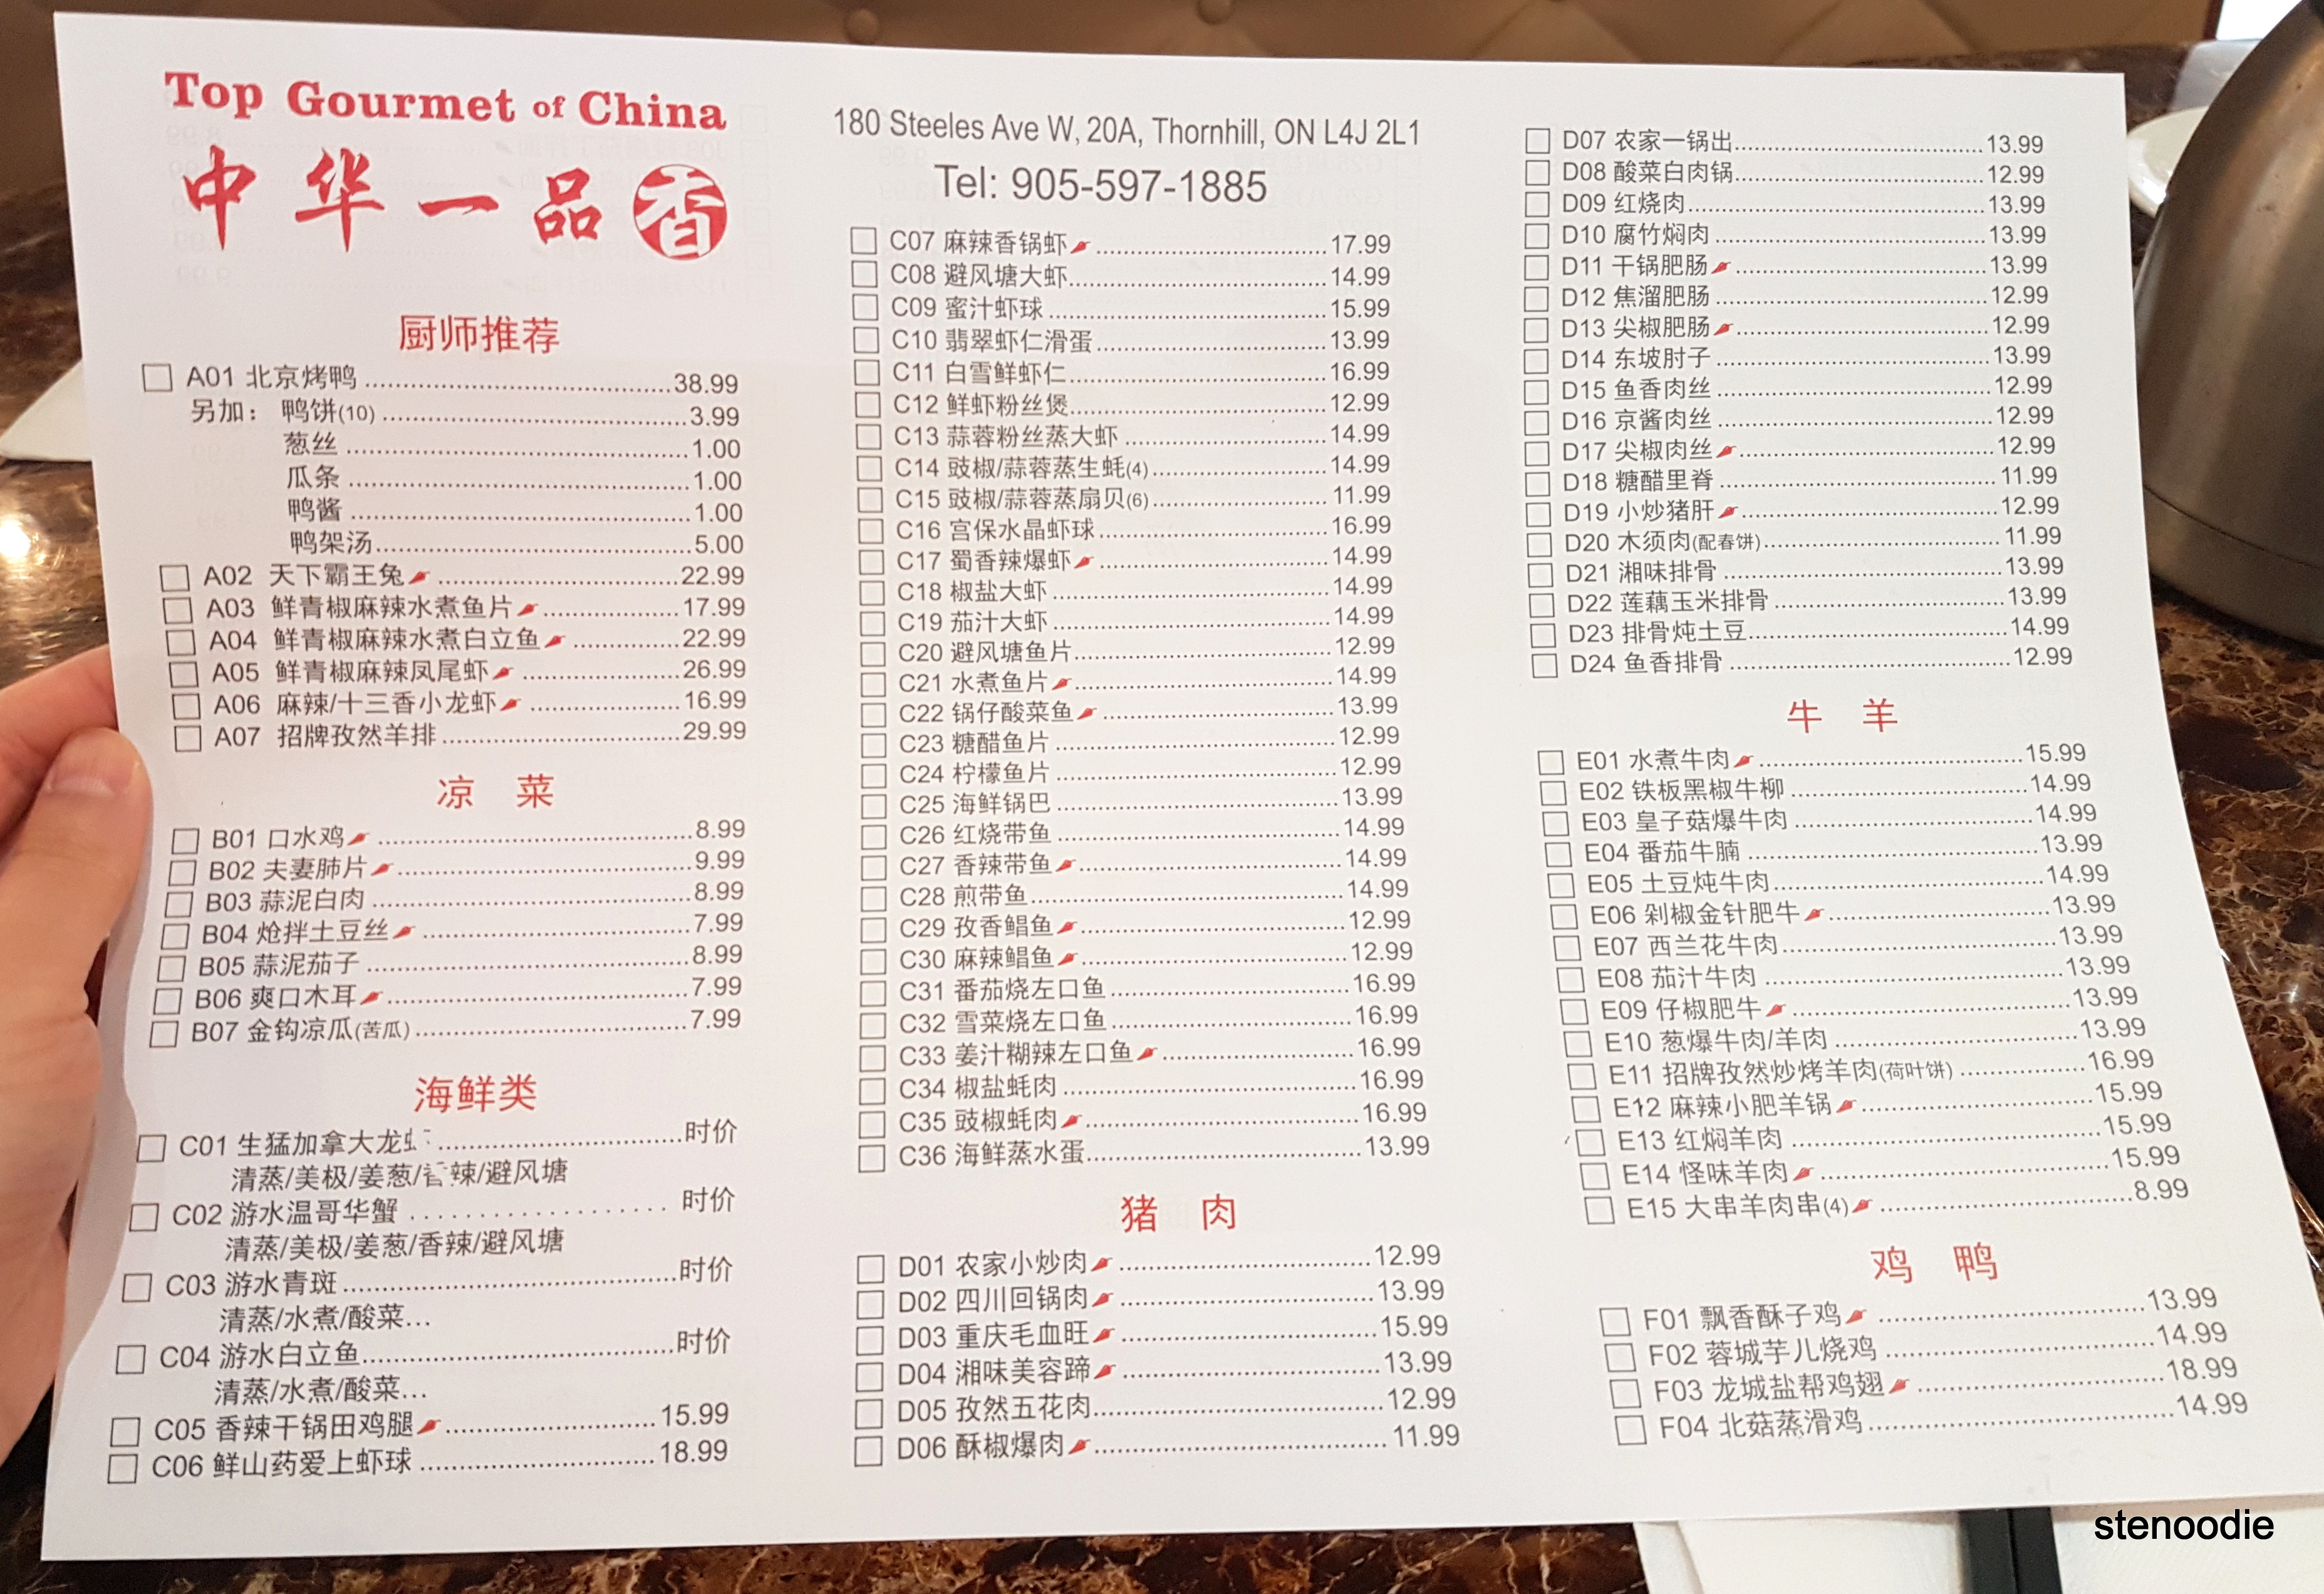 Top Gourmet of China menu and prices